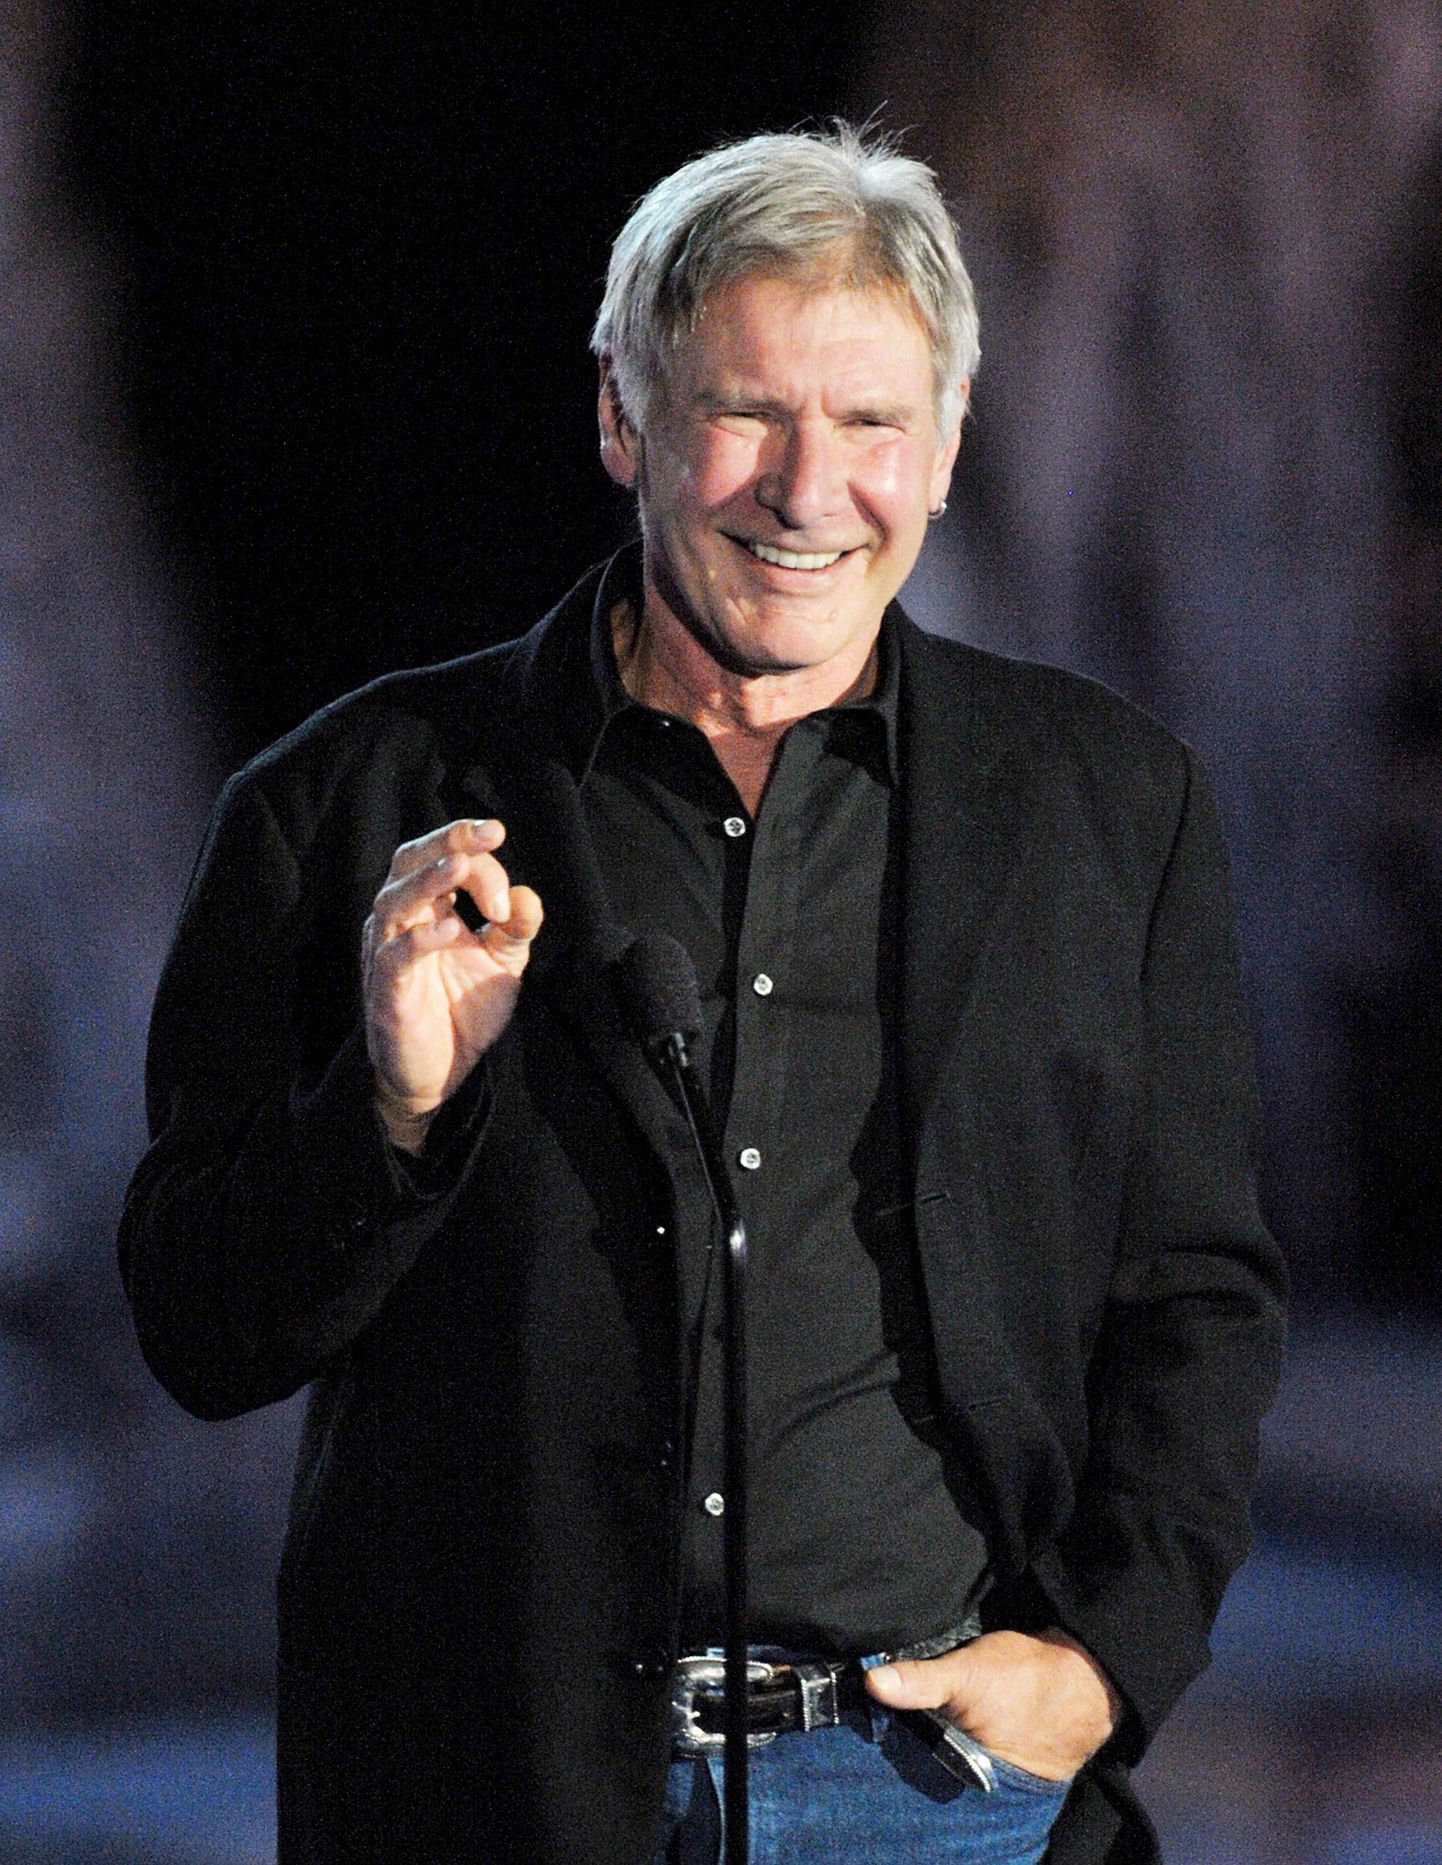 Spike TV Scream 2009 auhinnagala - Harrison Ford